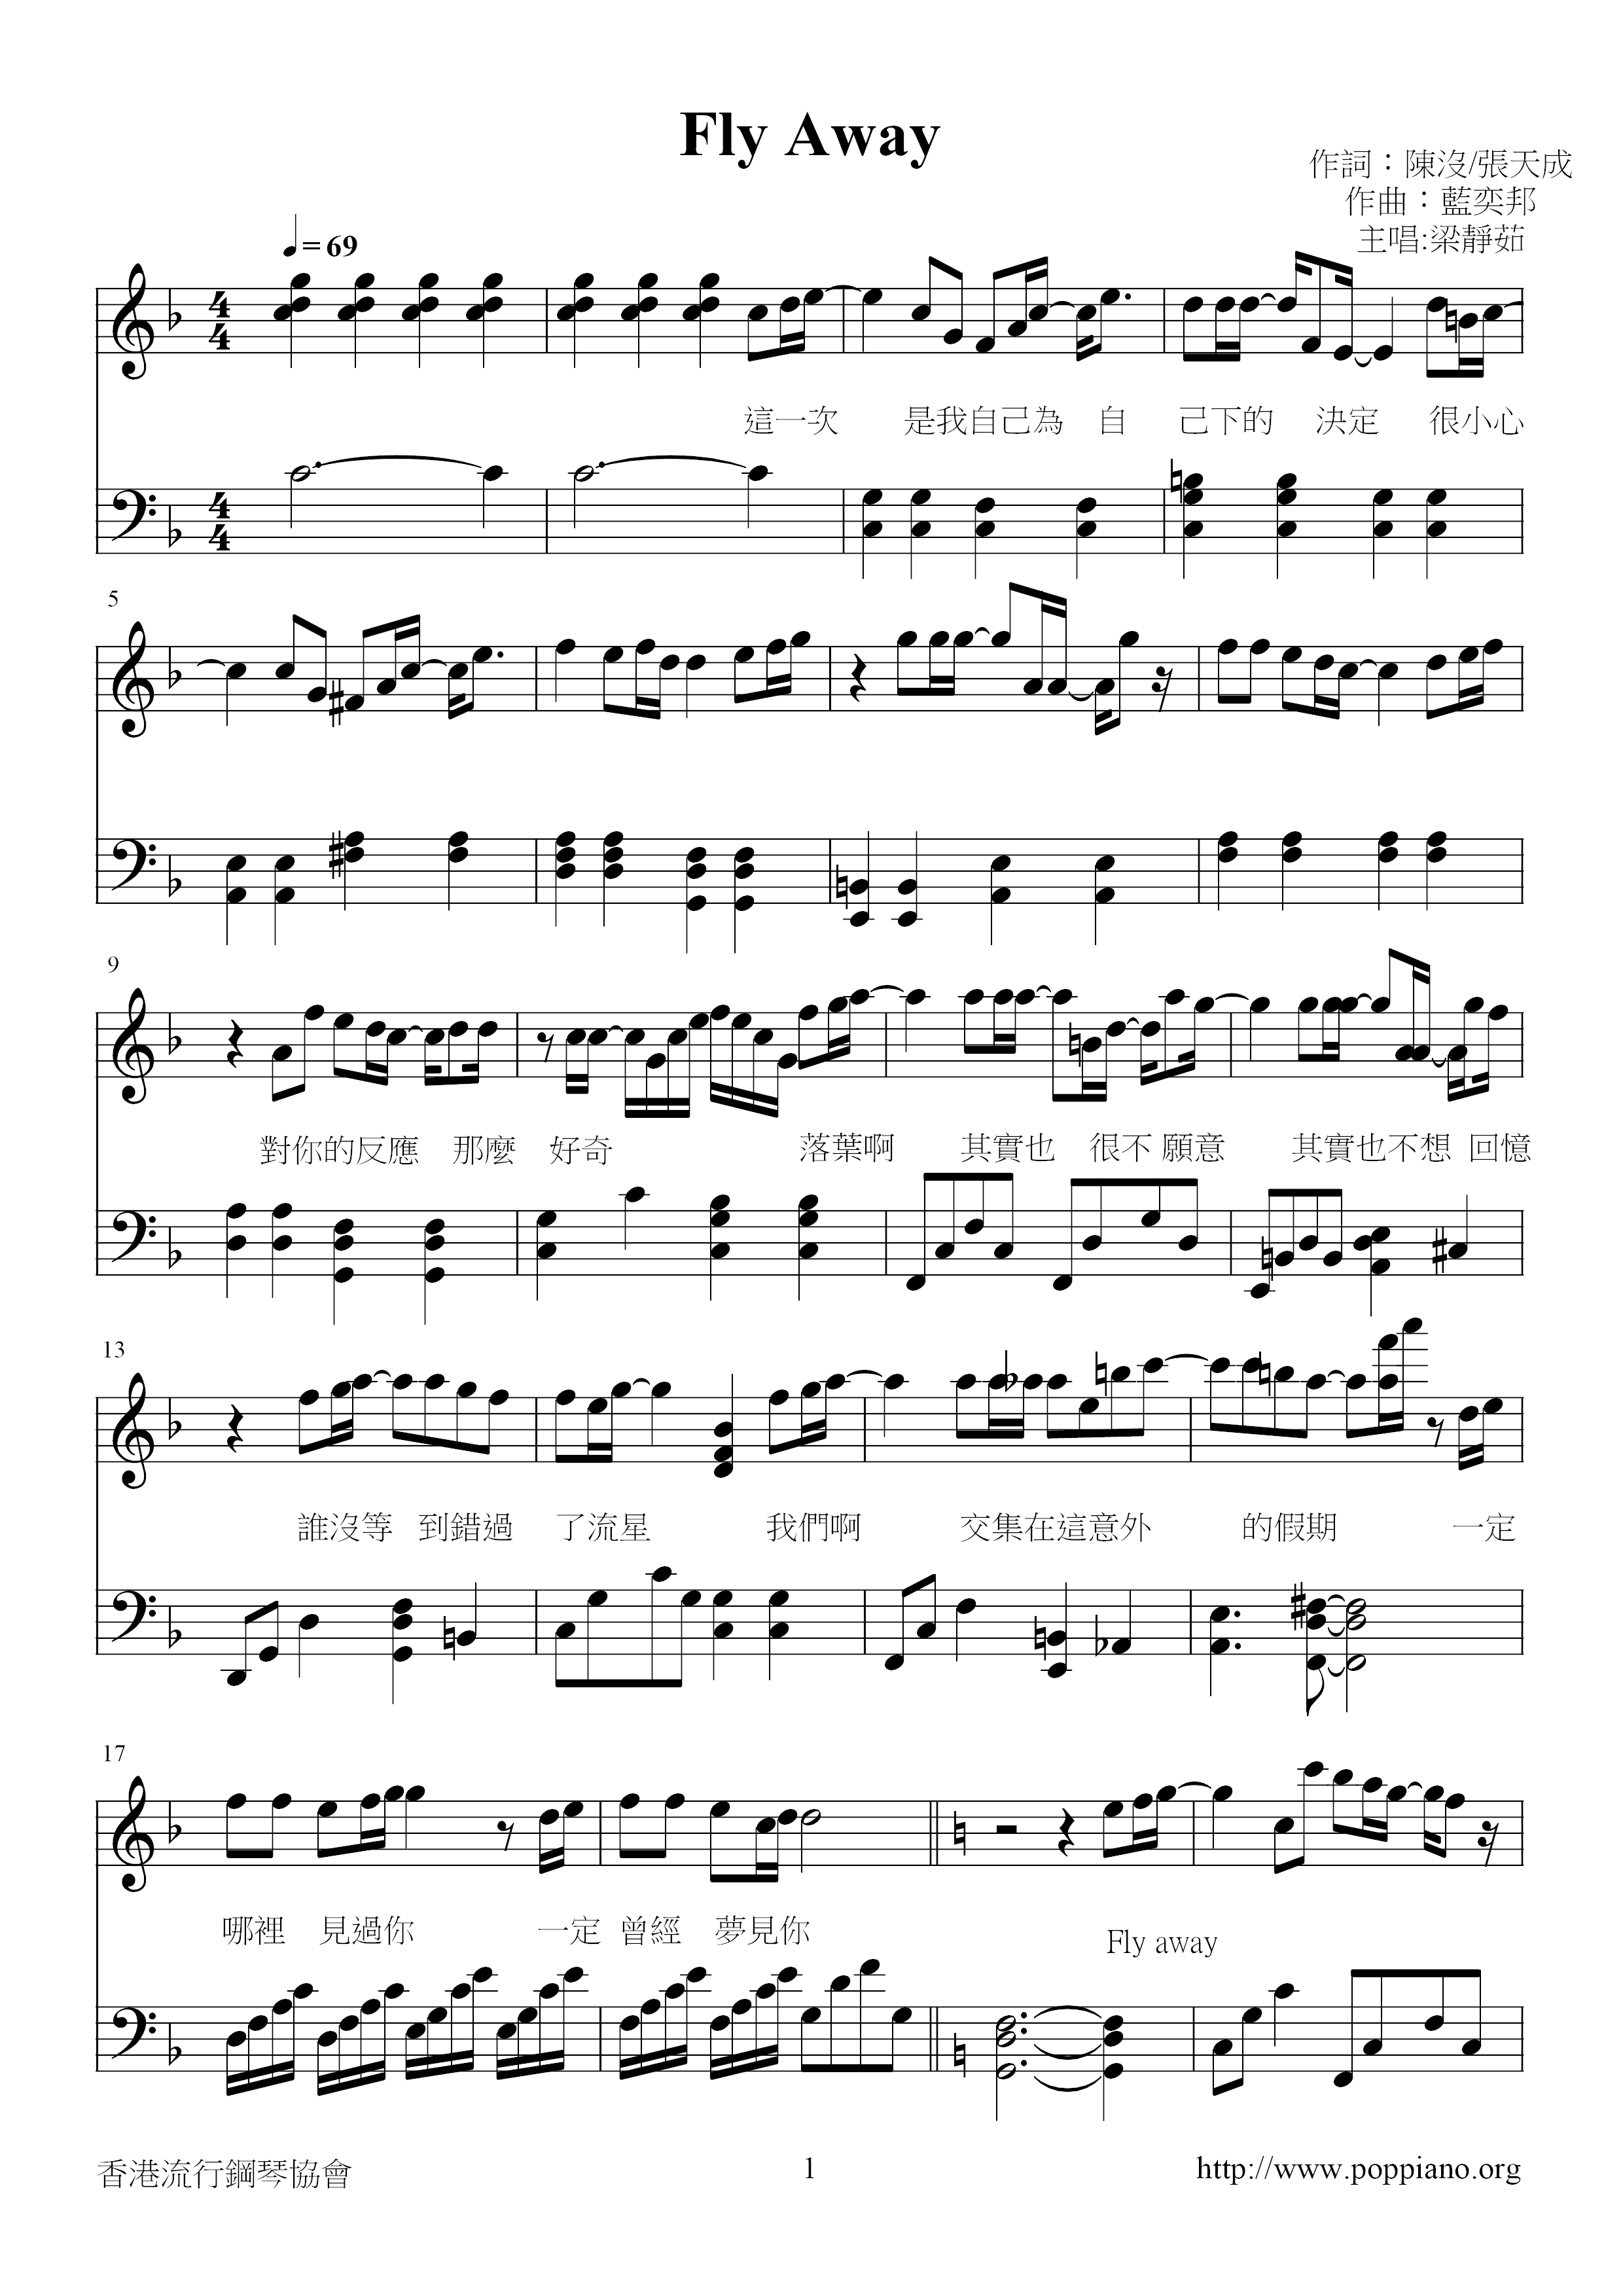 John Denver: Fly Away sheet music for piano solo (chords, lyrics, melody)